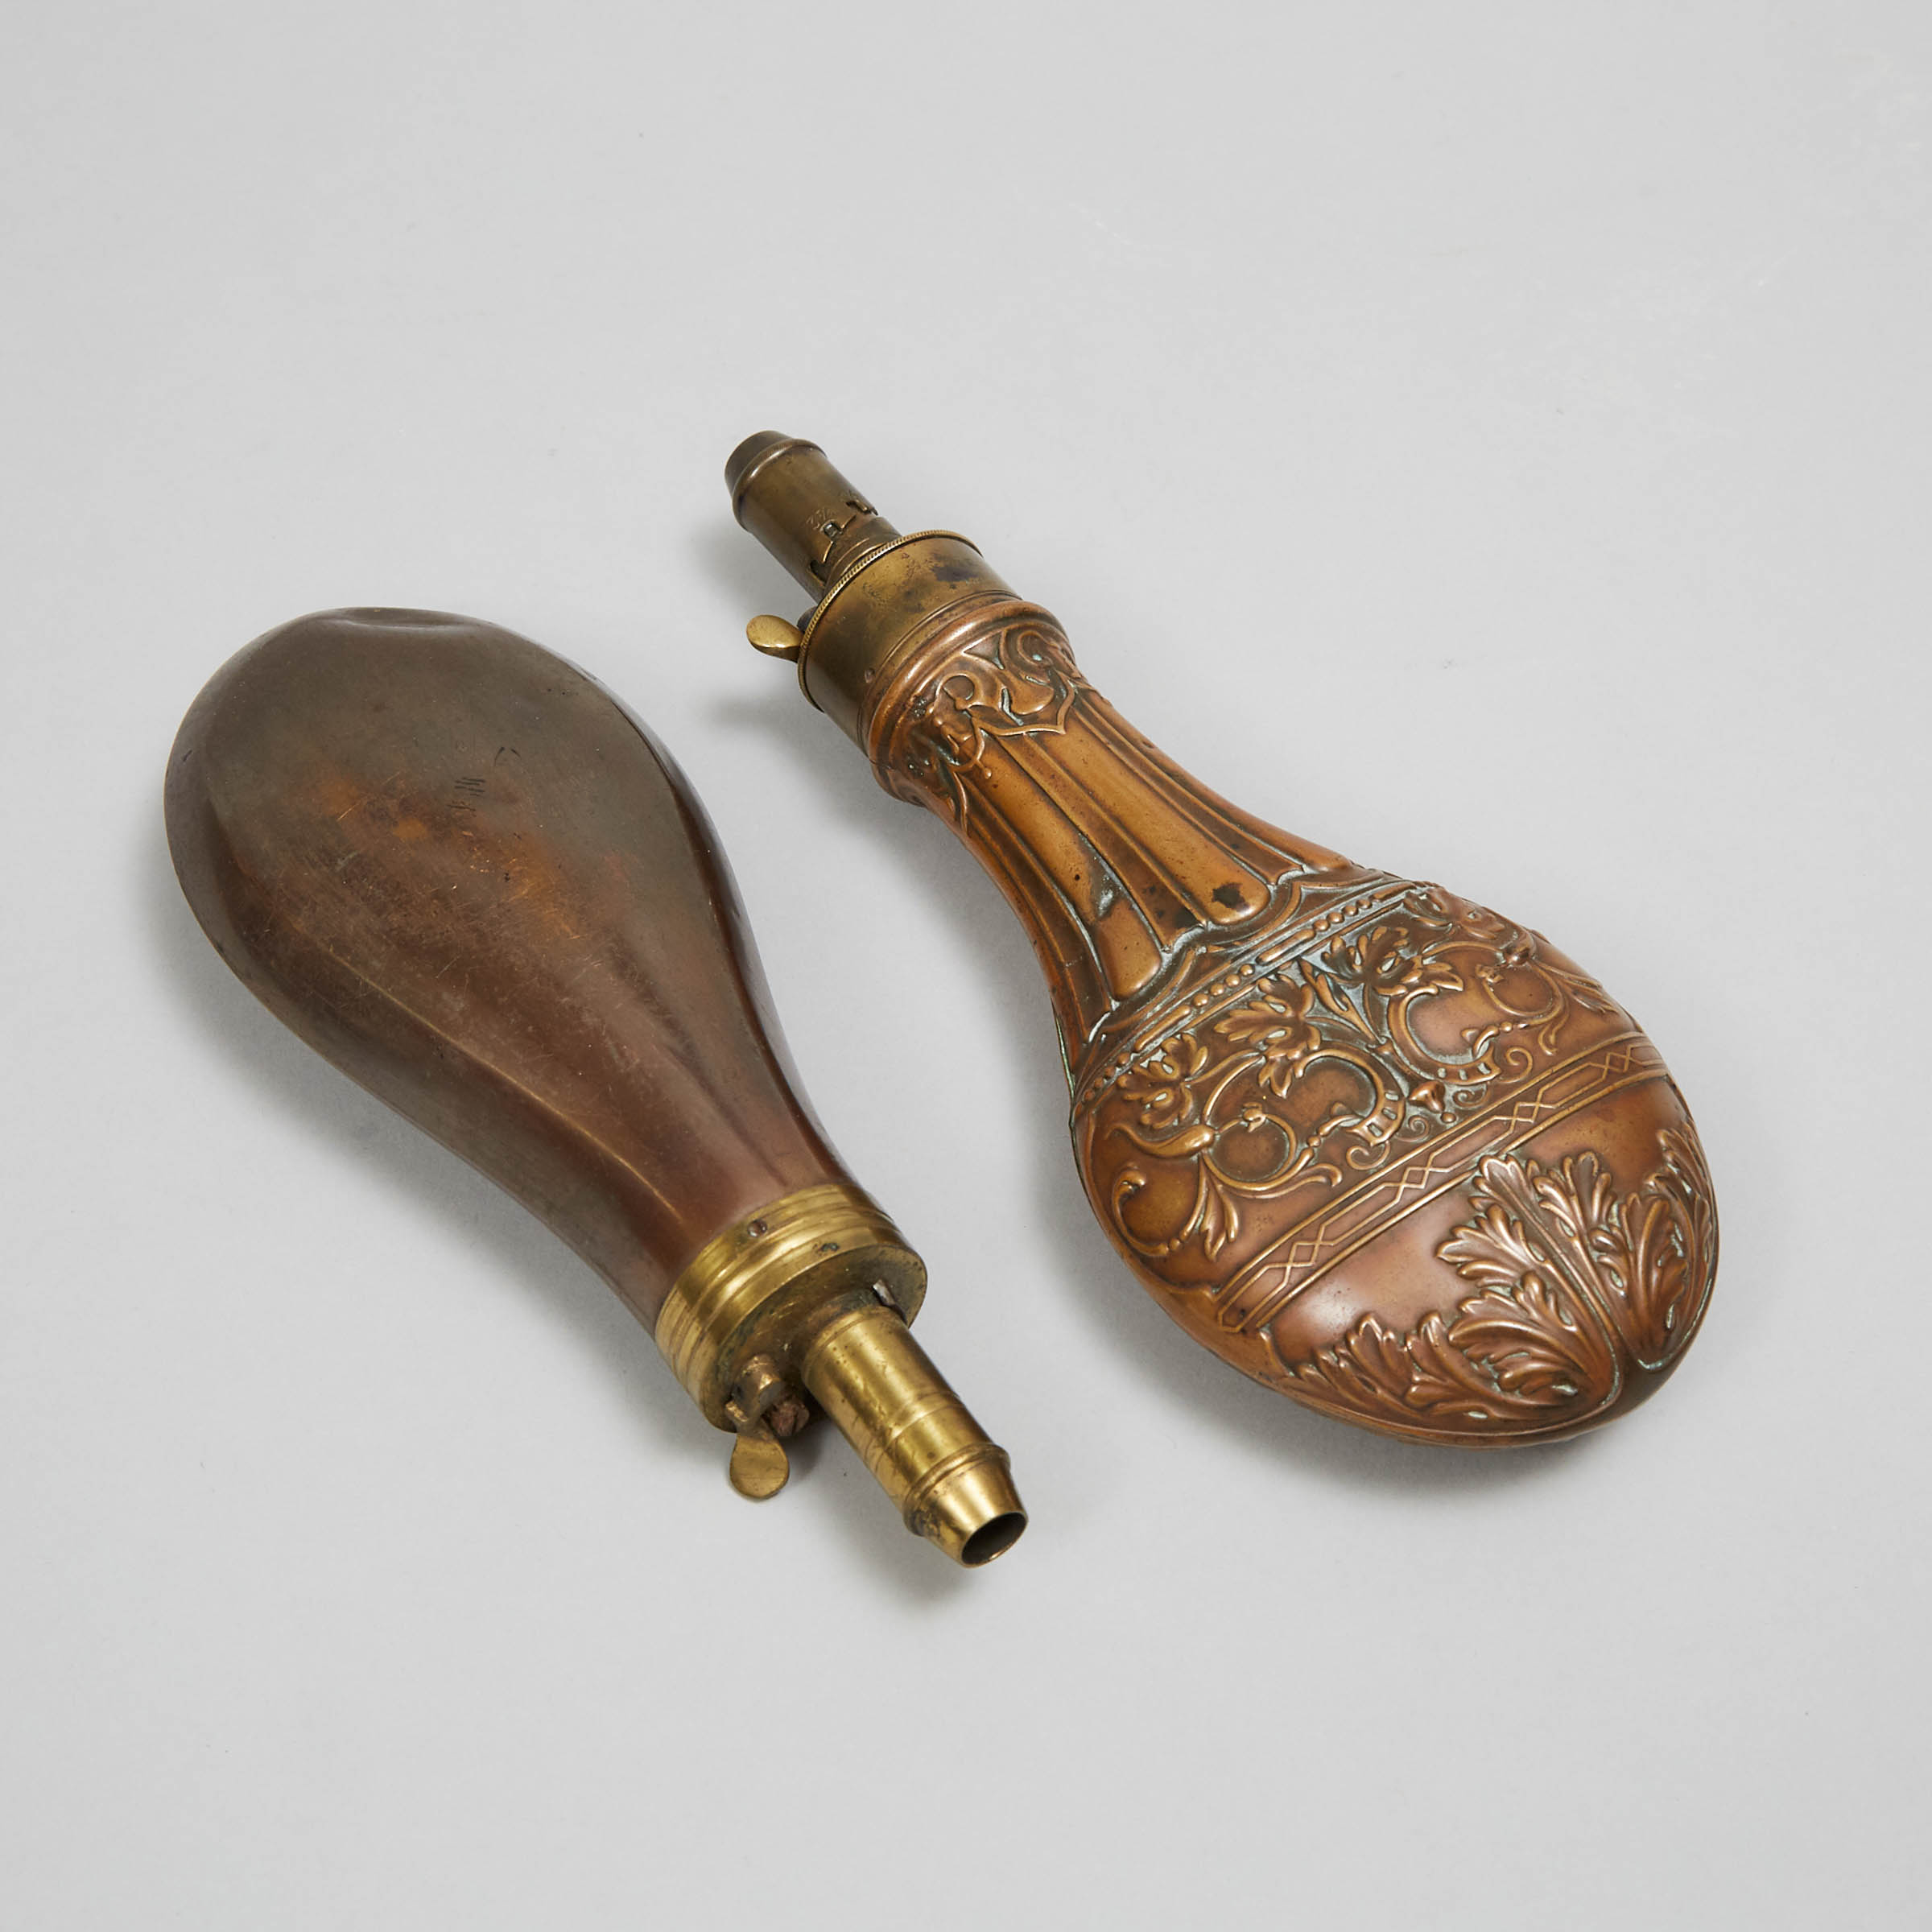 Two Victorian Copper Powder Flasks, 19th century